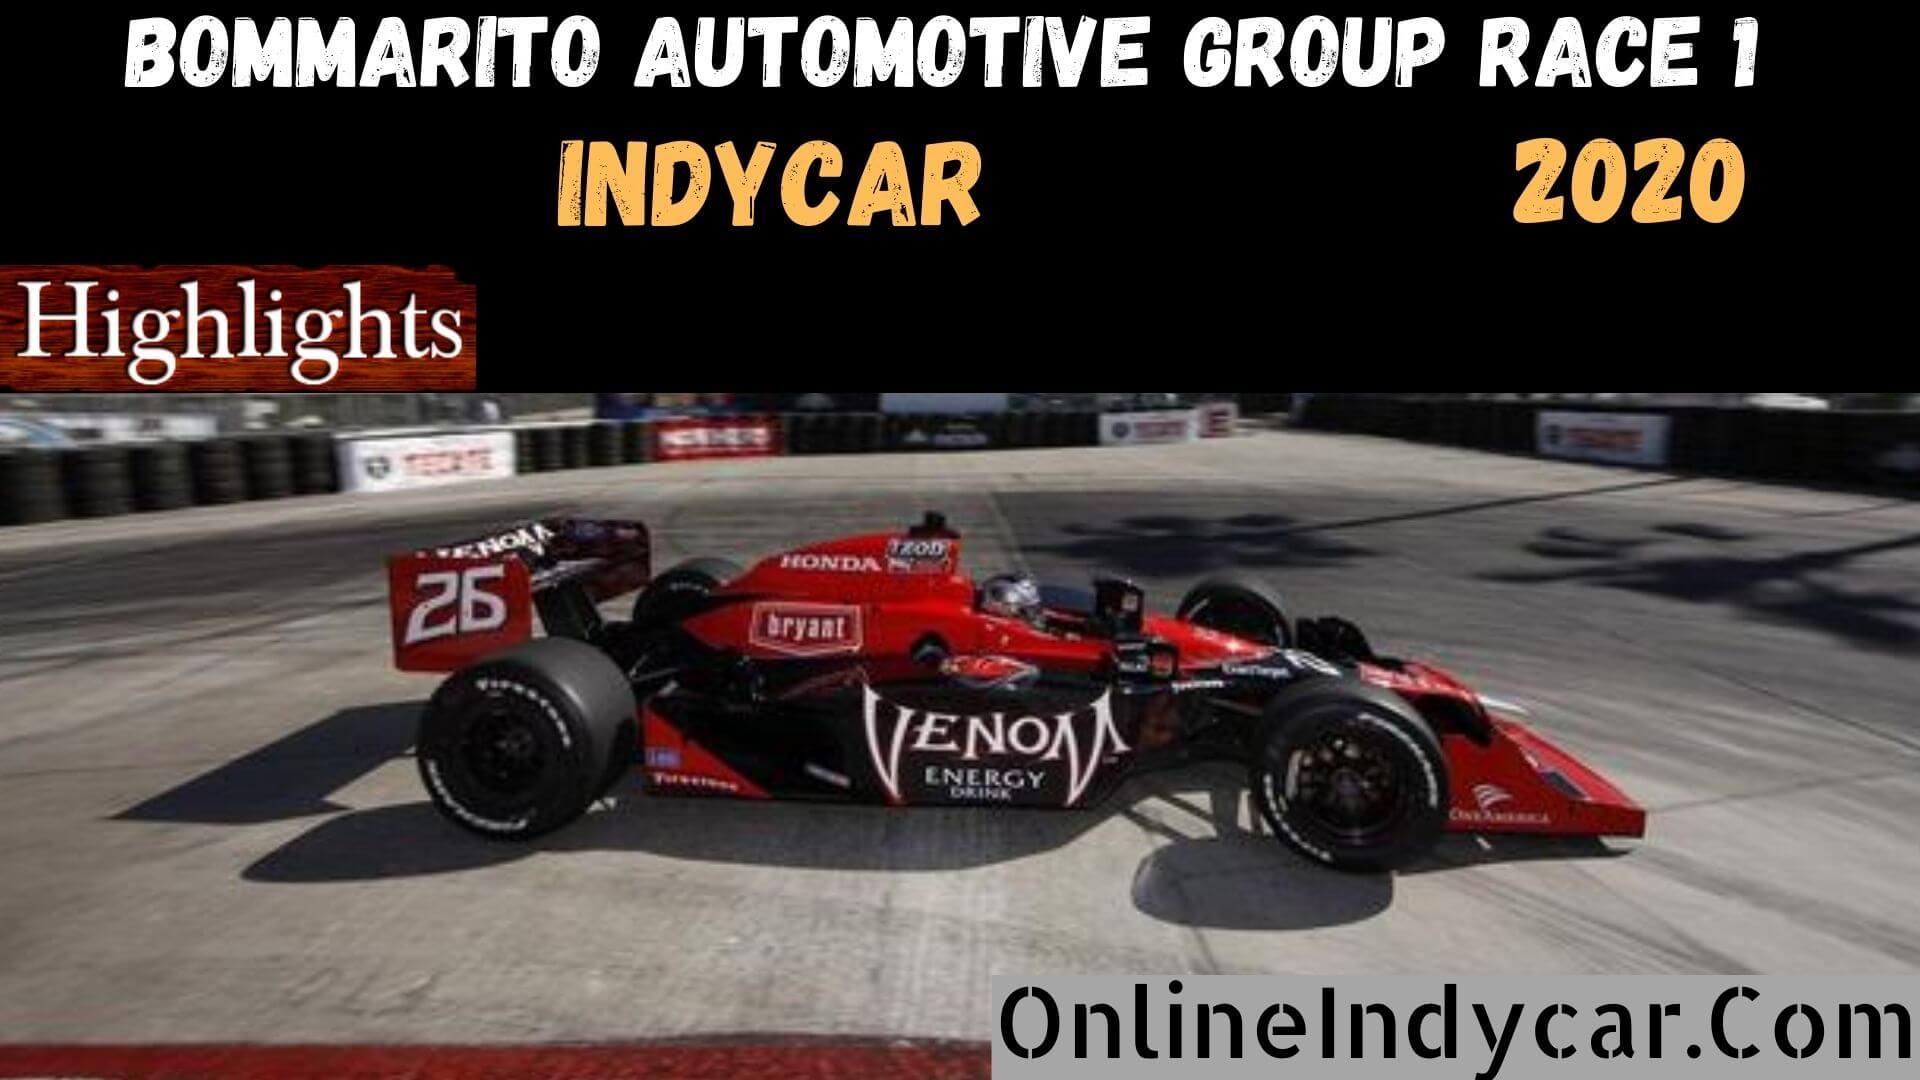 Bommarito Automotive Group Race 1 Indycar Highlights 2020